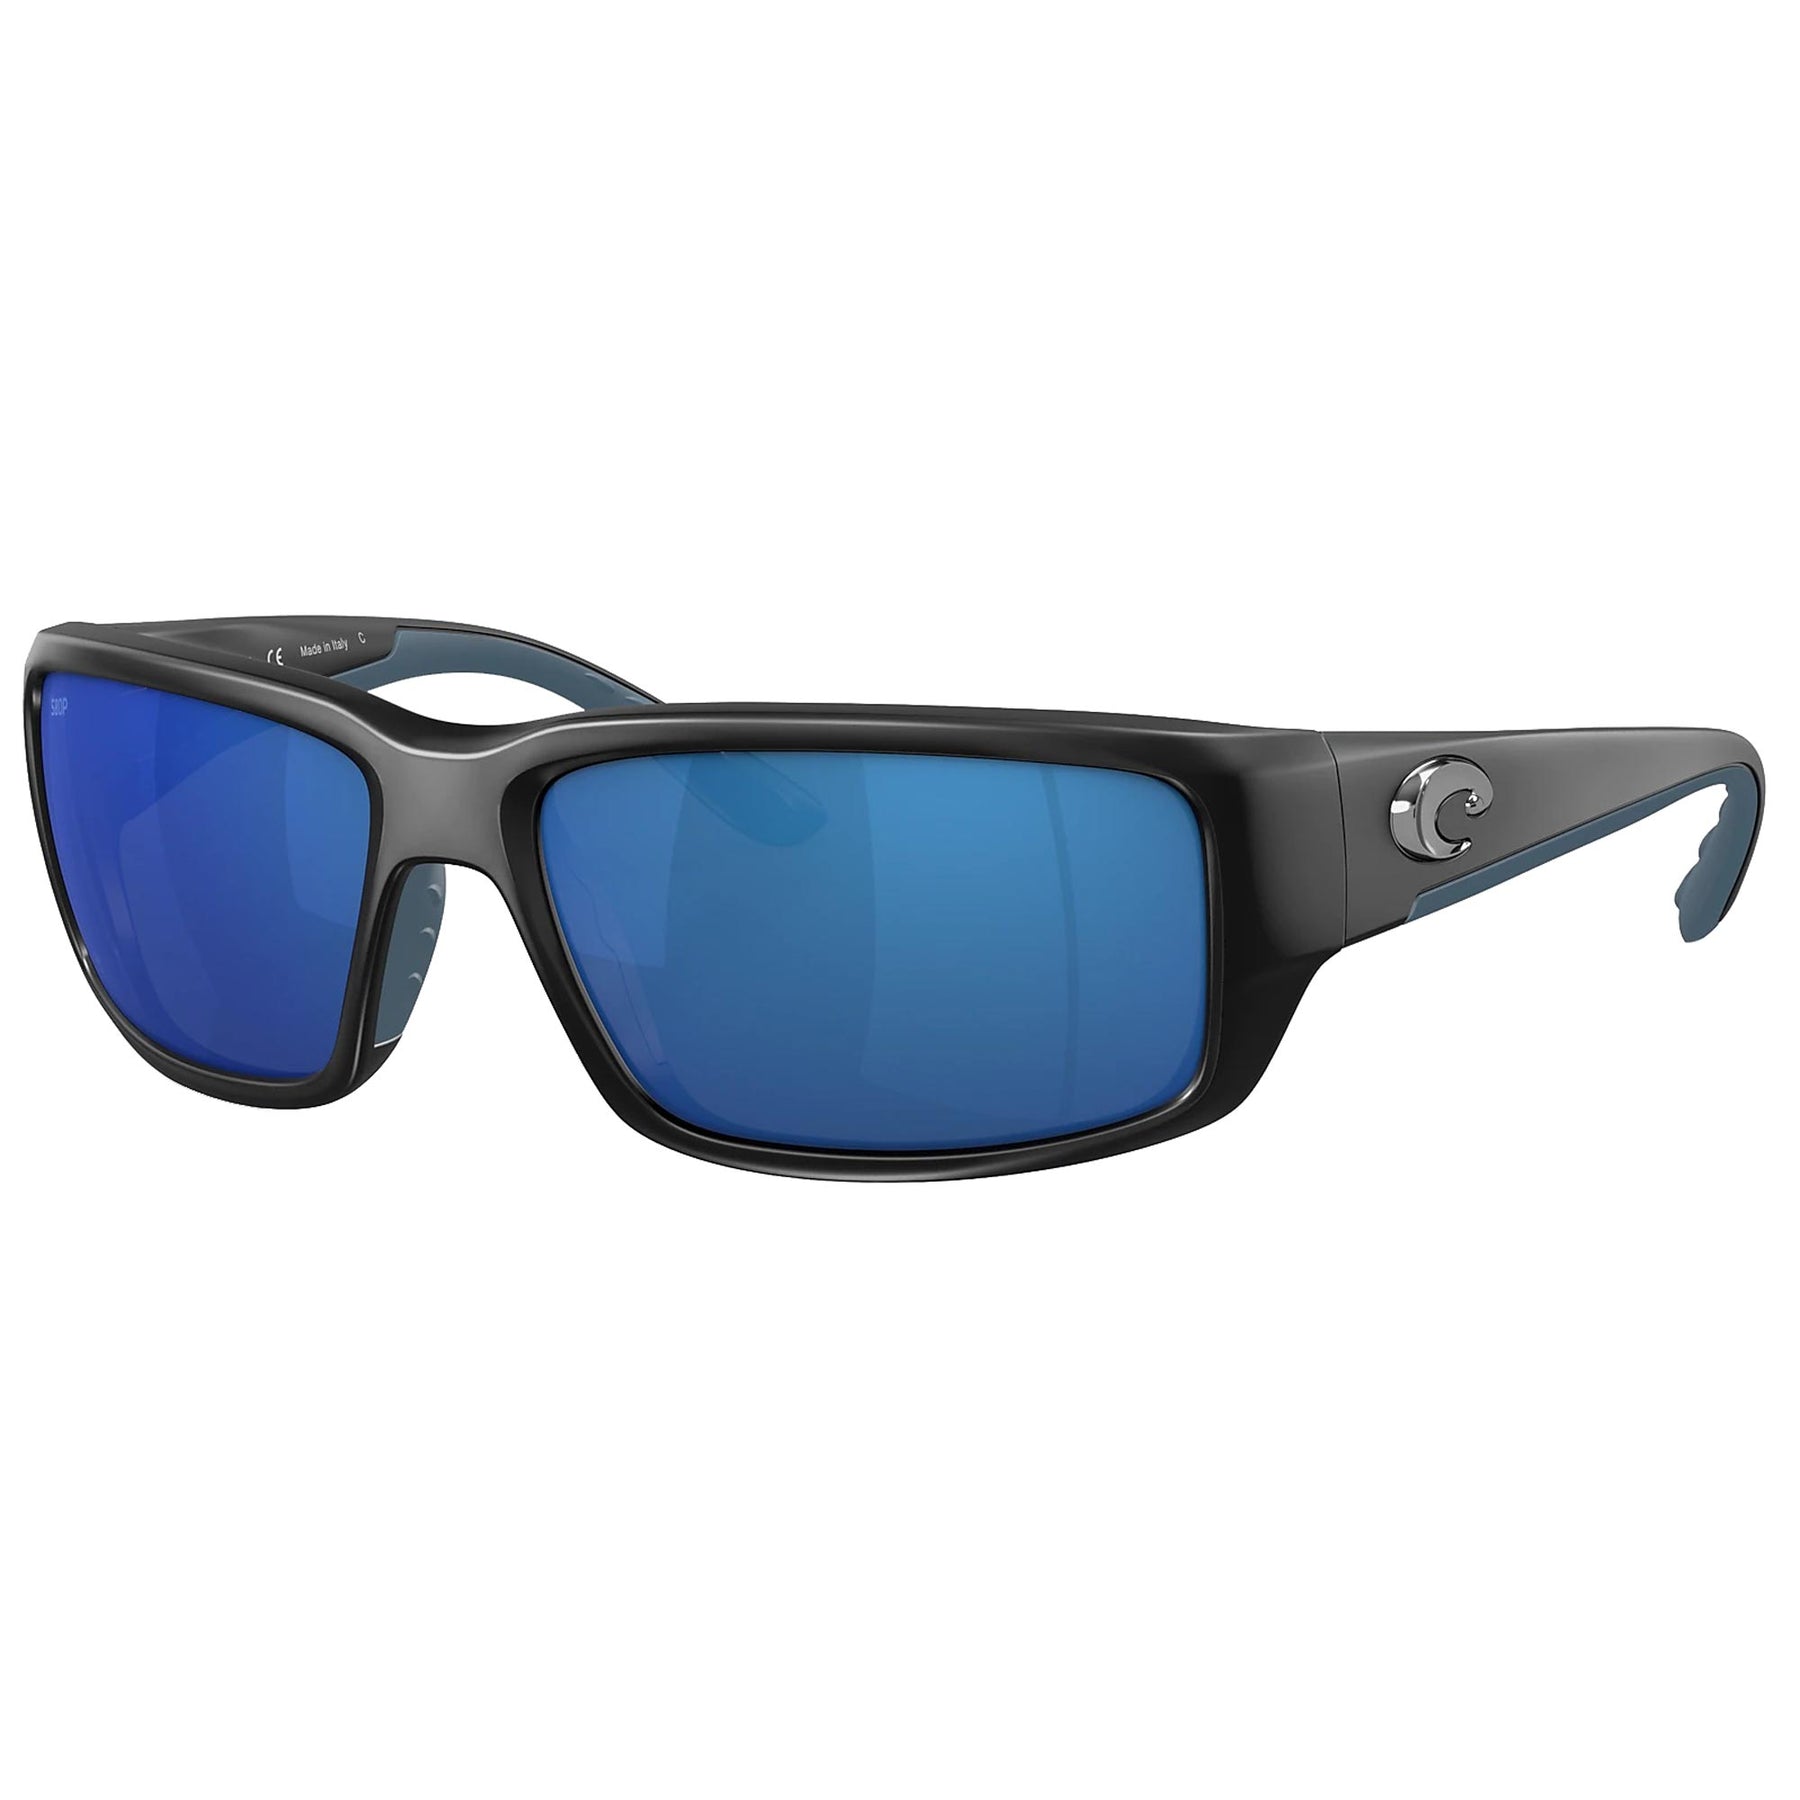 Costa Del Mar Men's Sunglasses - Fantail Blue Mirror Lens Bio Resin | 06S9006 900616